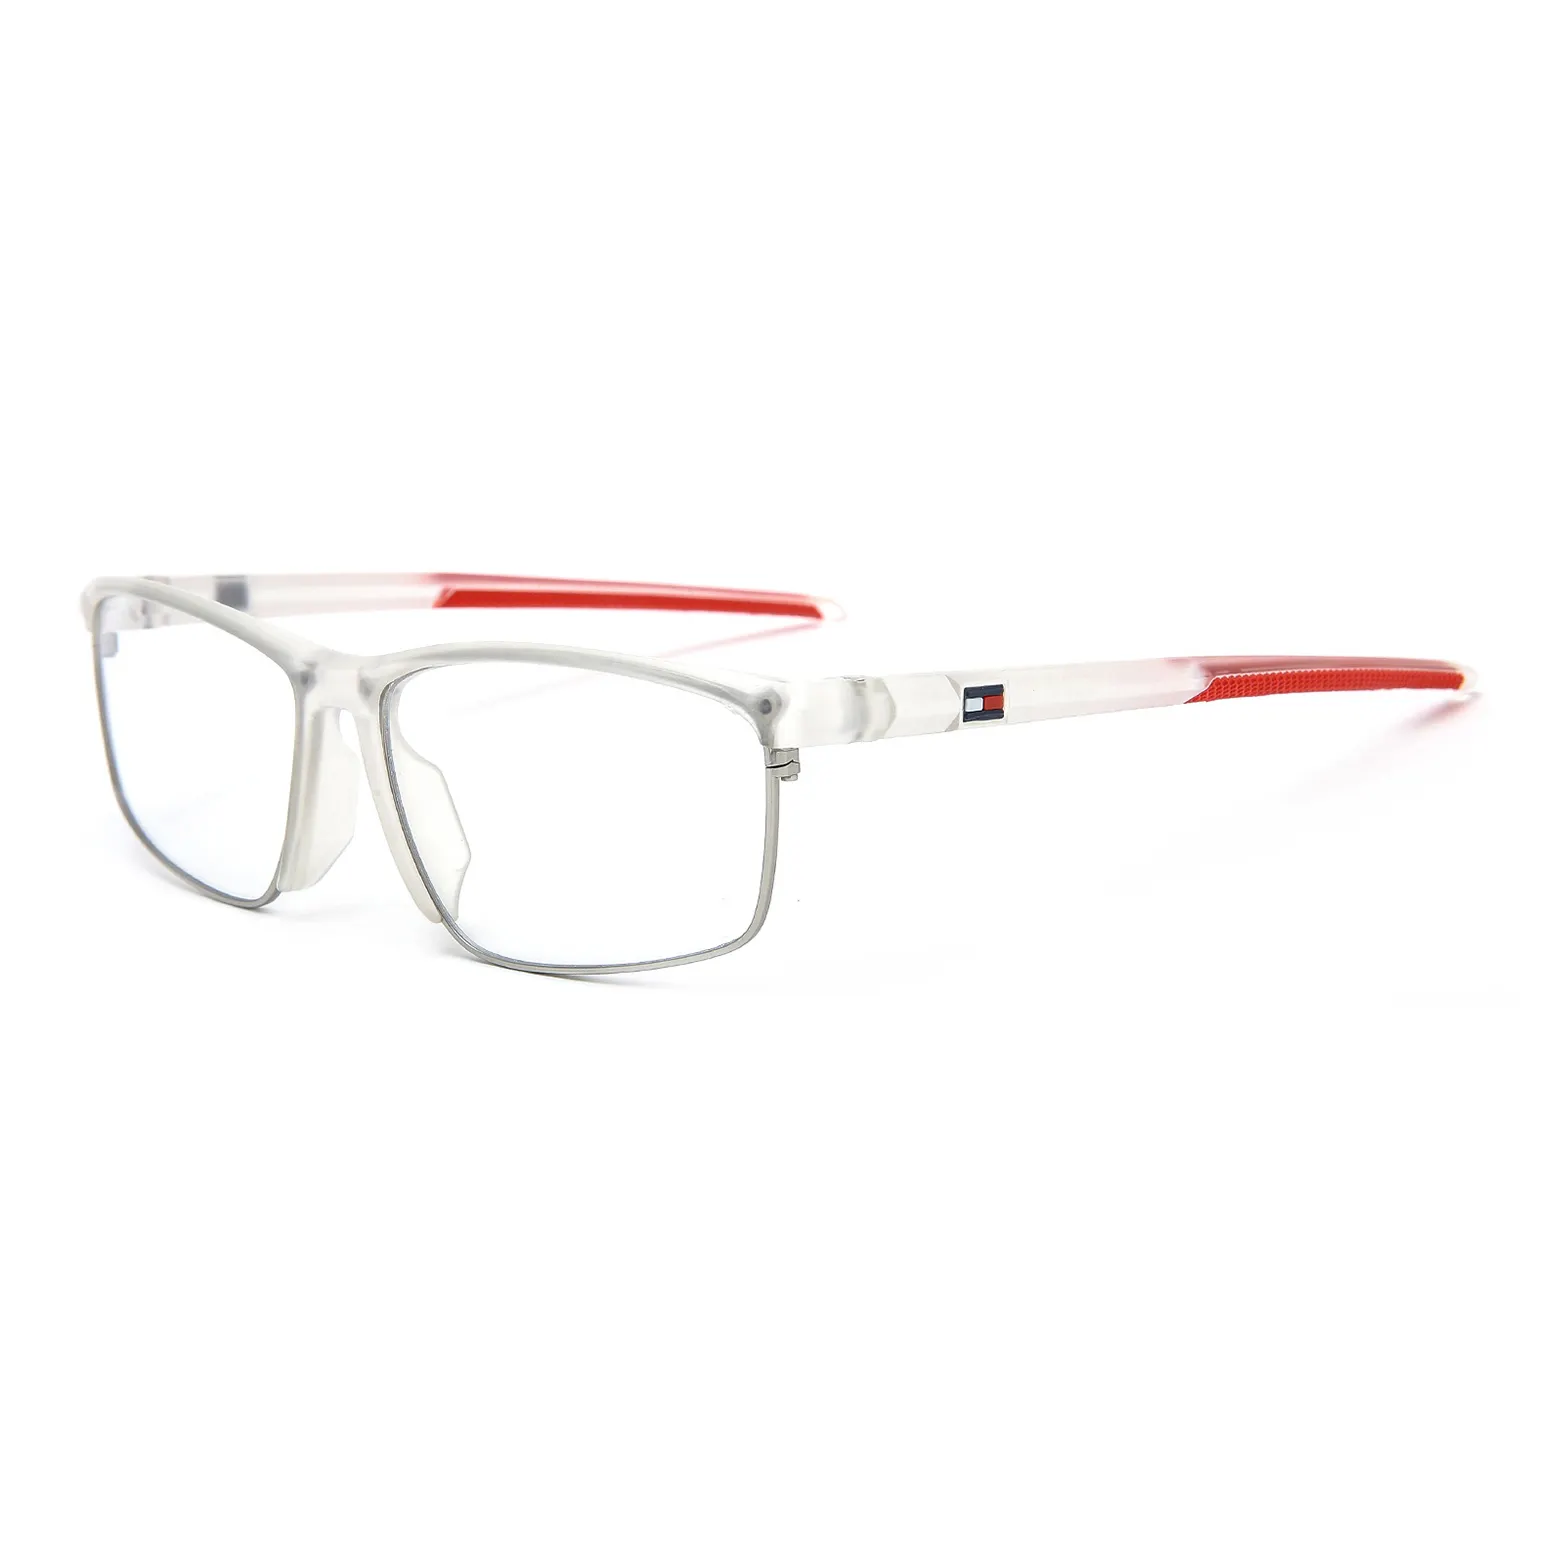 New TR eyeglasses eyewear Other TR90 Safety Mens glasses Sport Eyewear Good Quality Eyewear Soft Frames